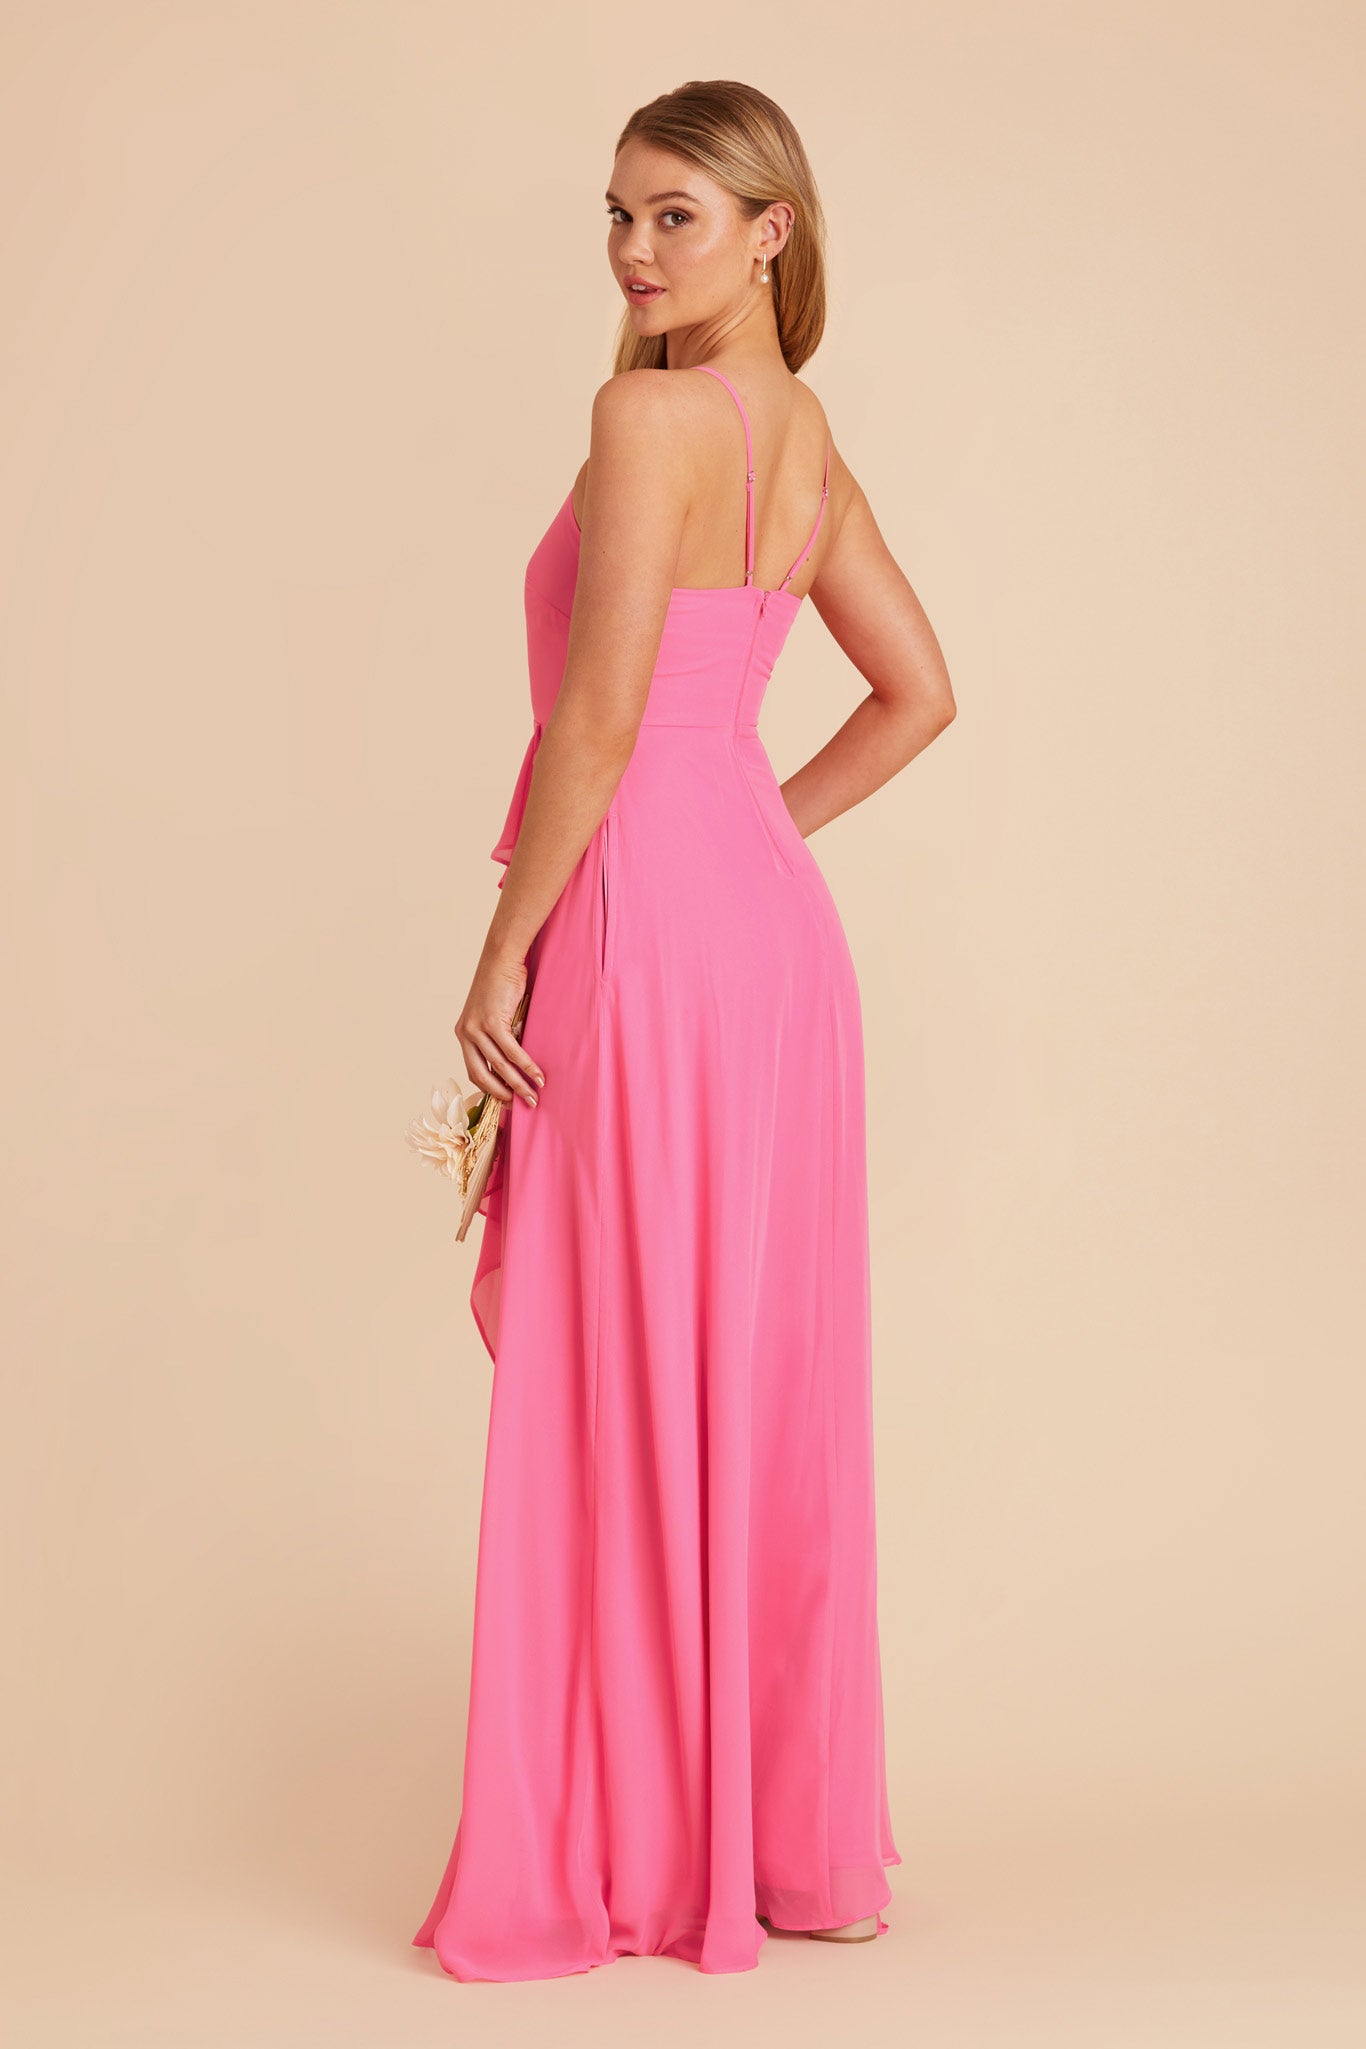 Bon Bon Pink Theresa Chiffon Dress by Birdy Grey